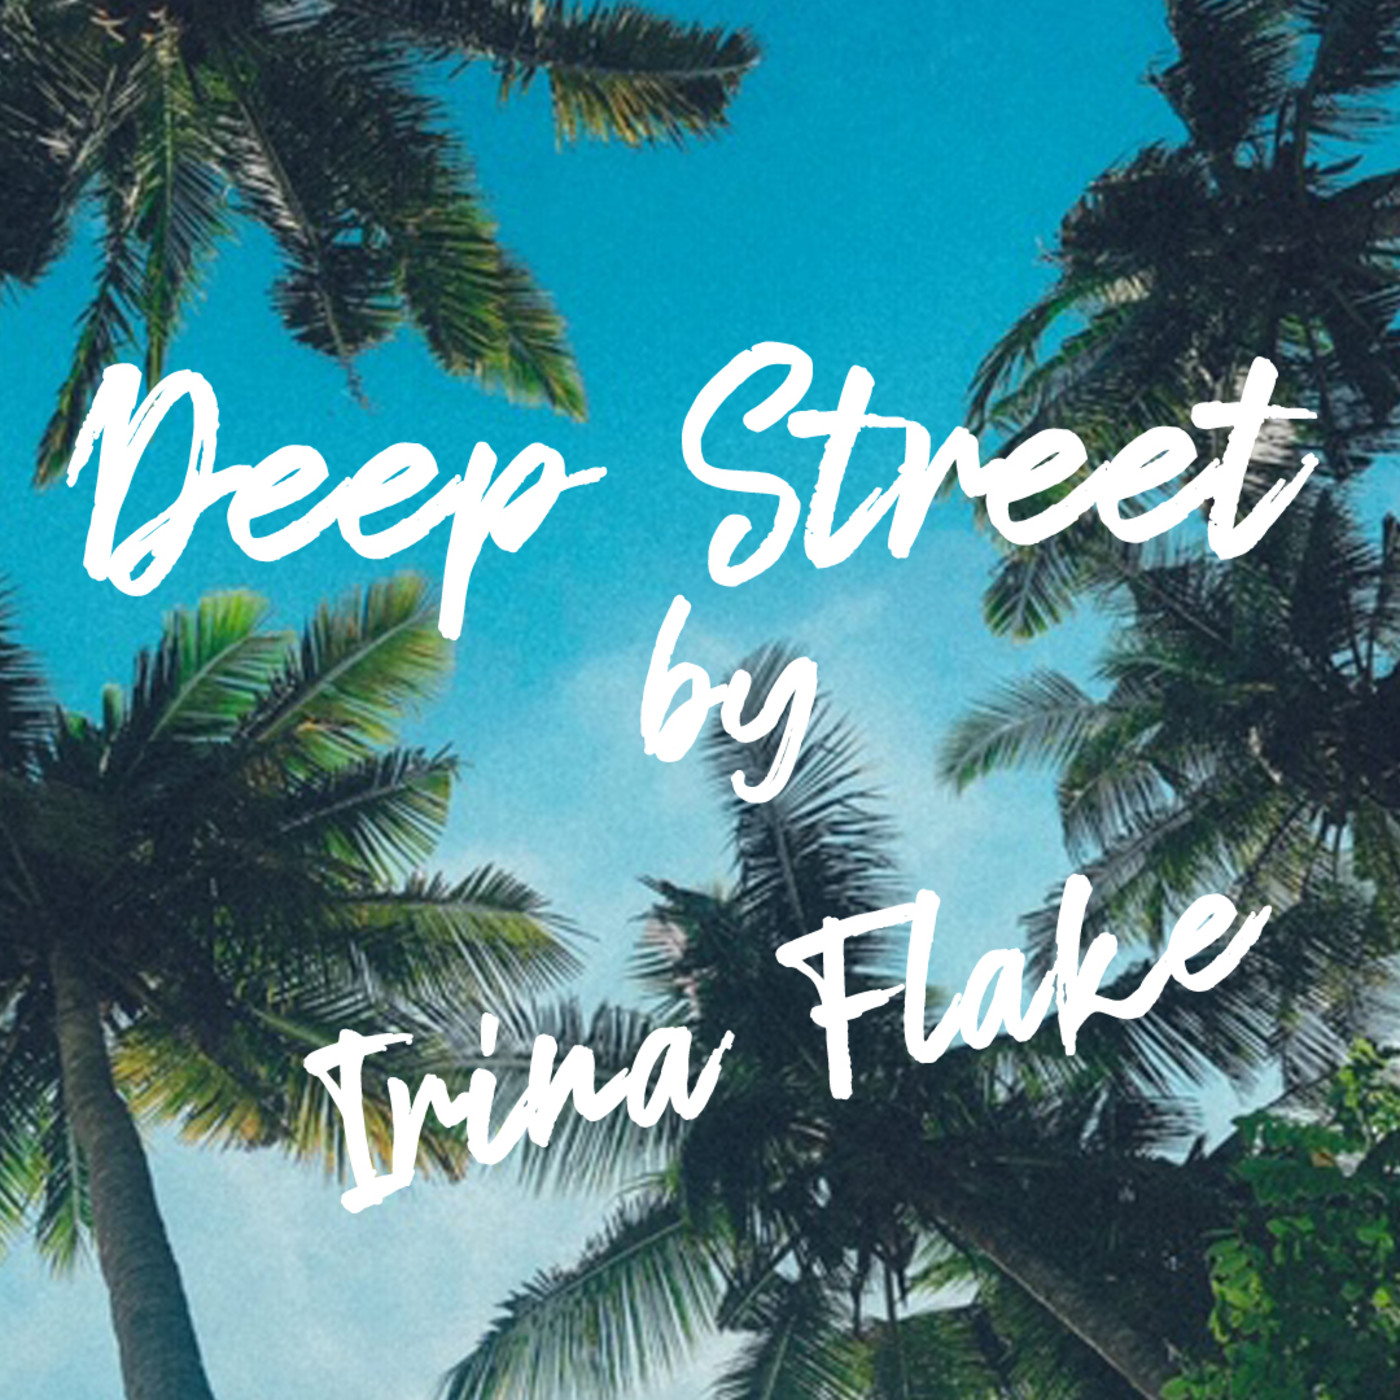 Deep Street by Irina Flake 16 I 02.06.2020